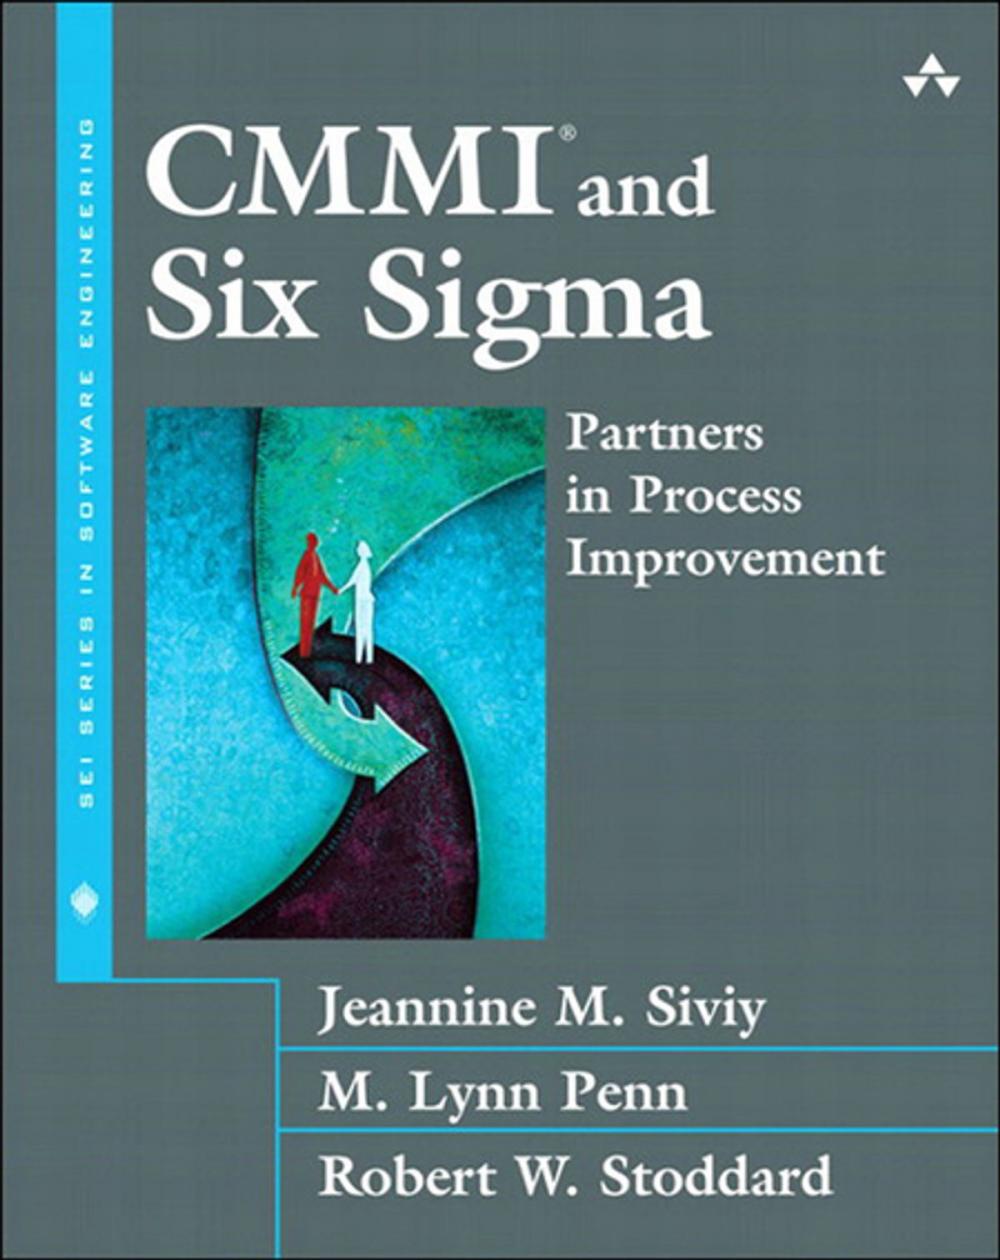 Big bigCover of CMMI and Six Sigma